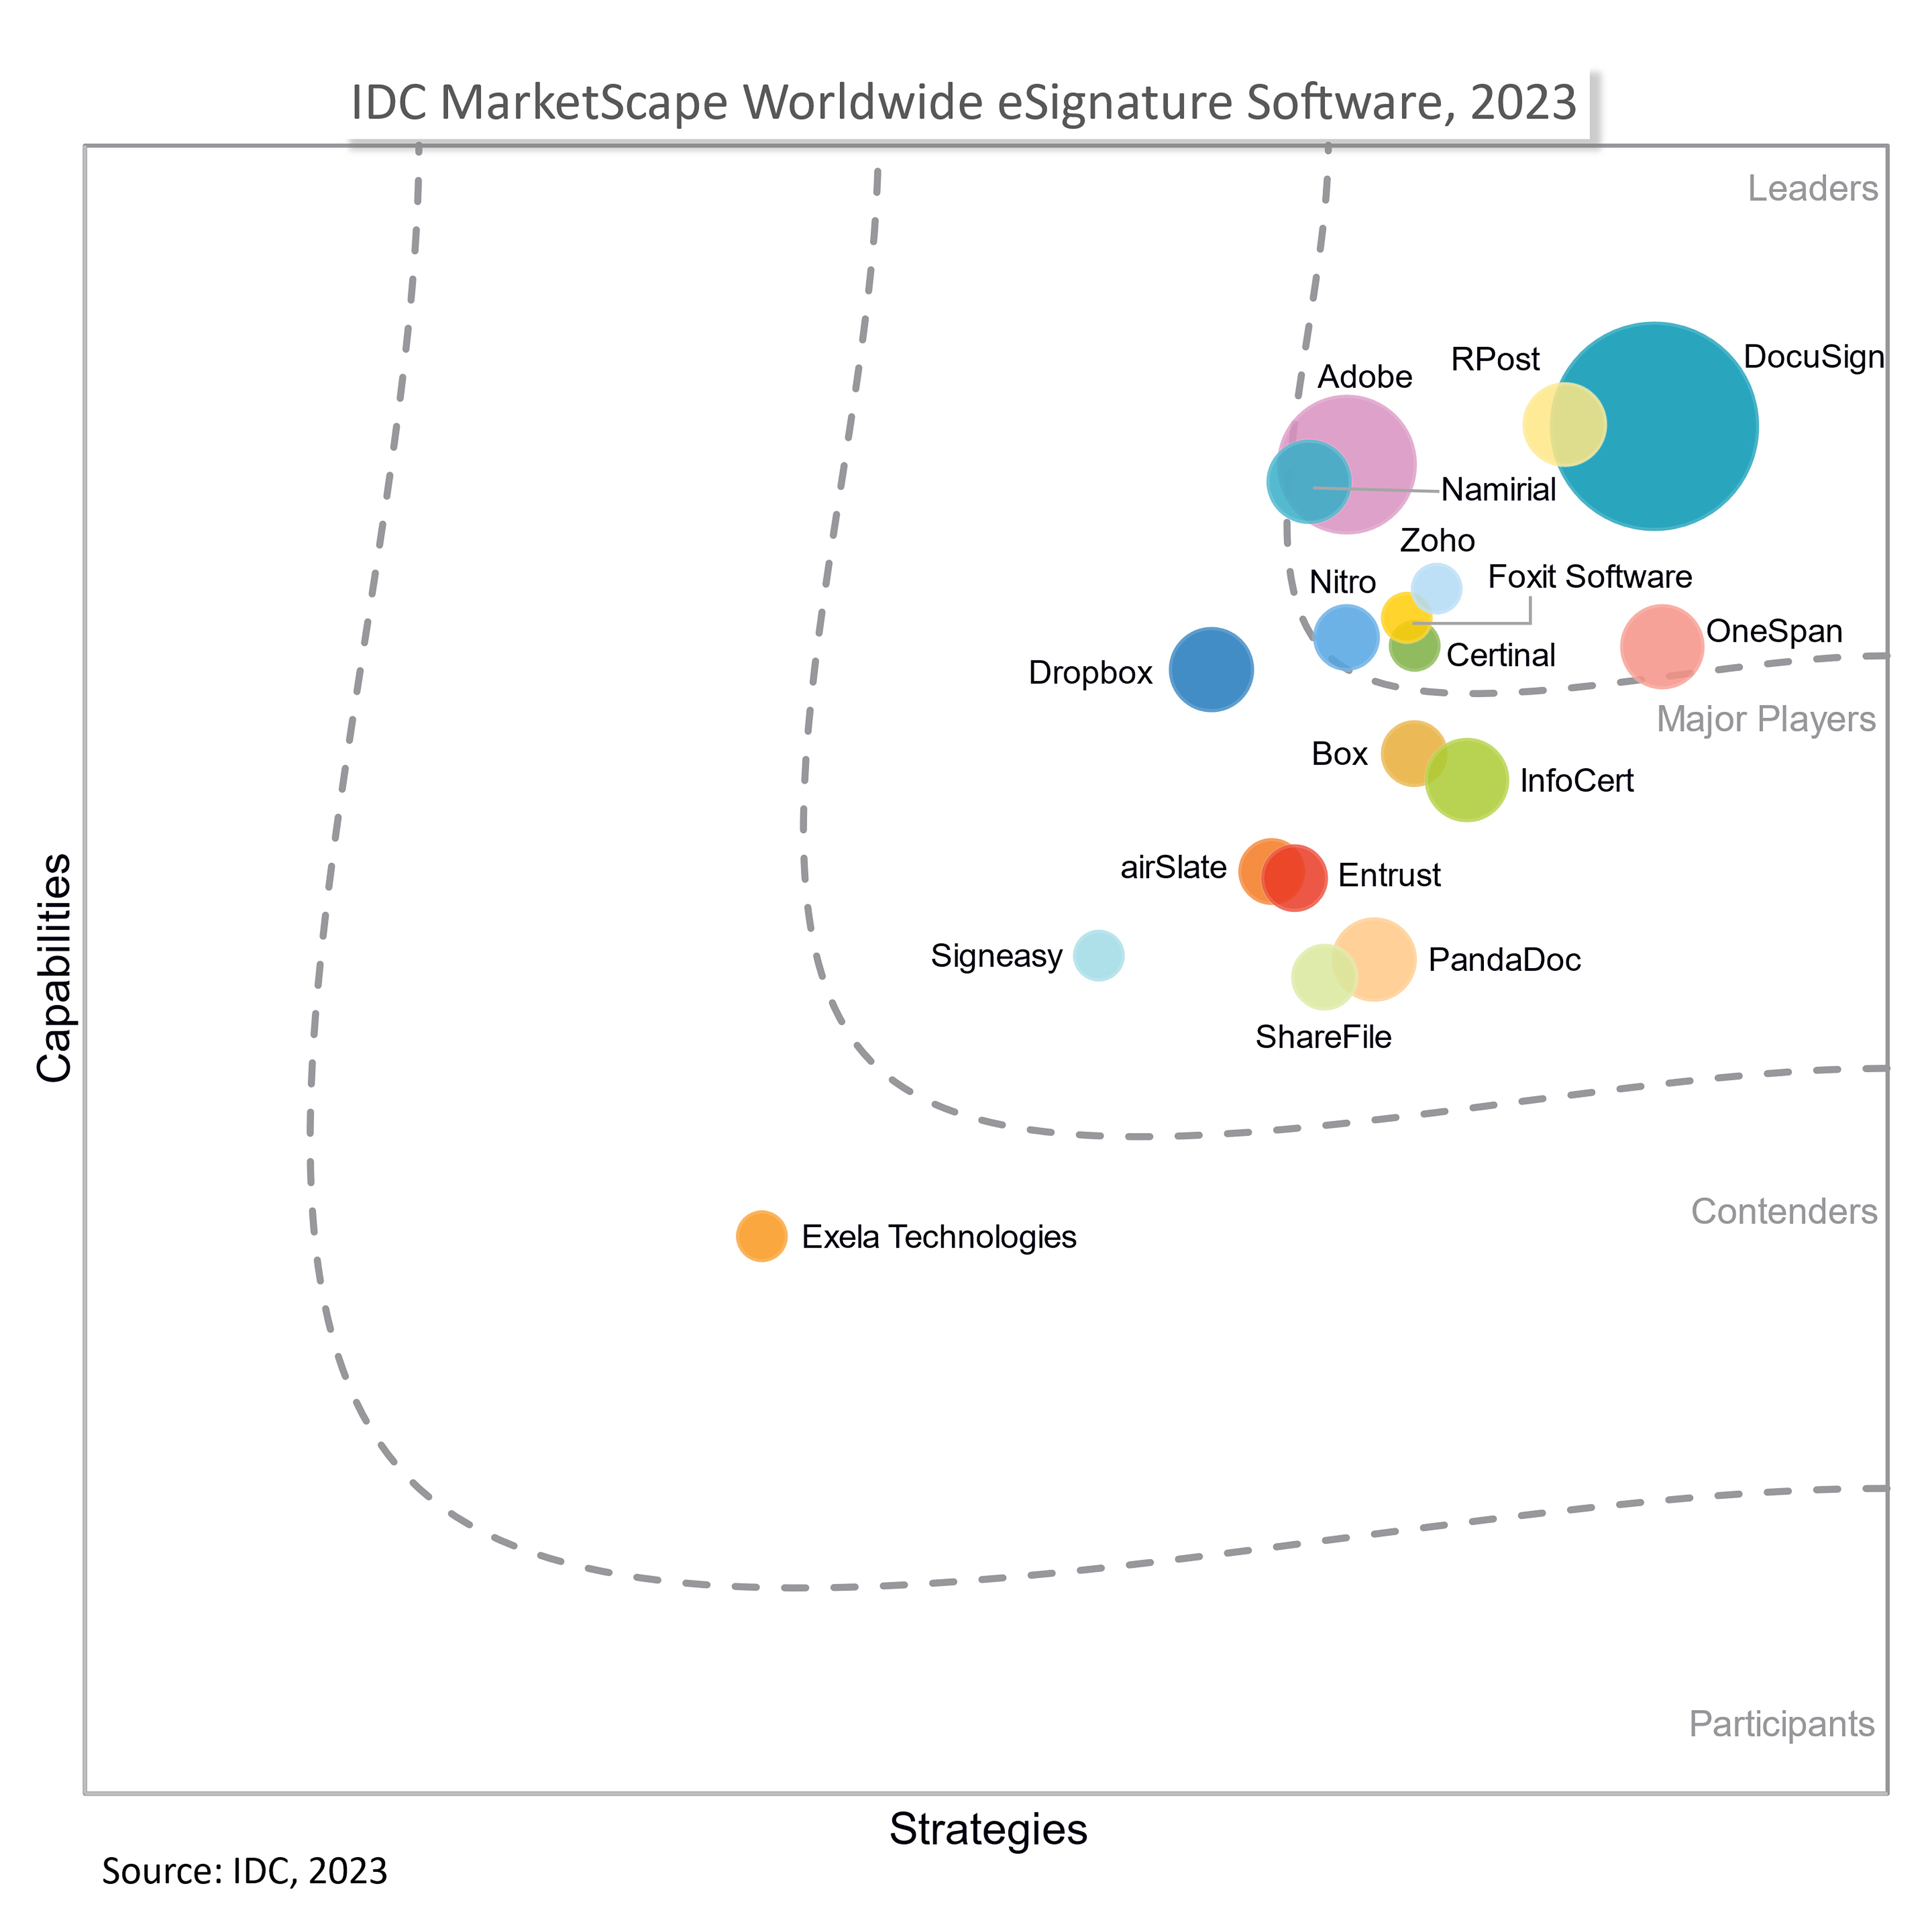 IDC MarketScape Worldwide eSignature Software, 2023